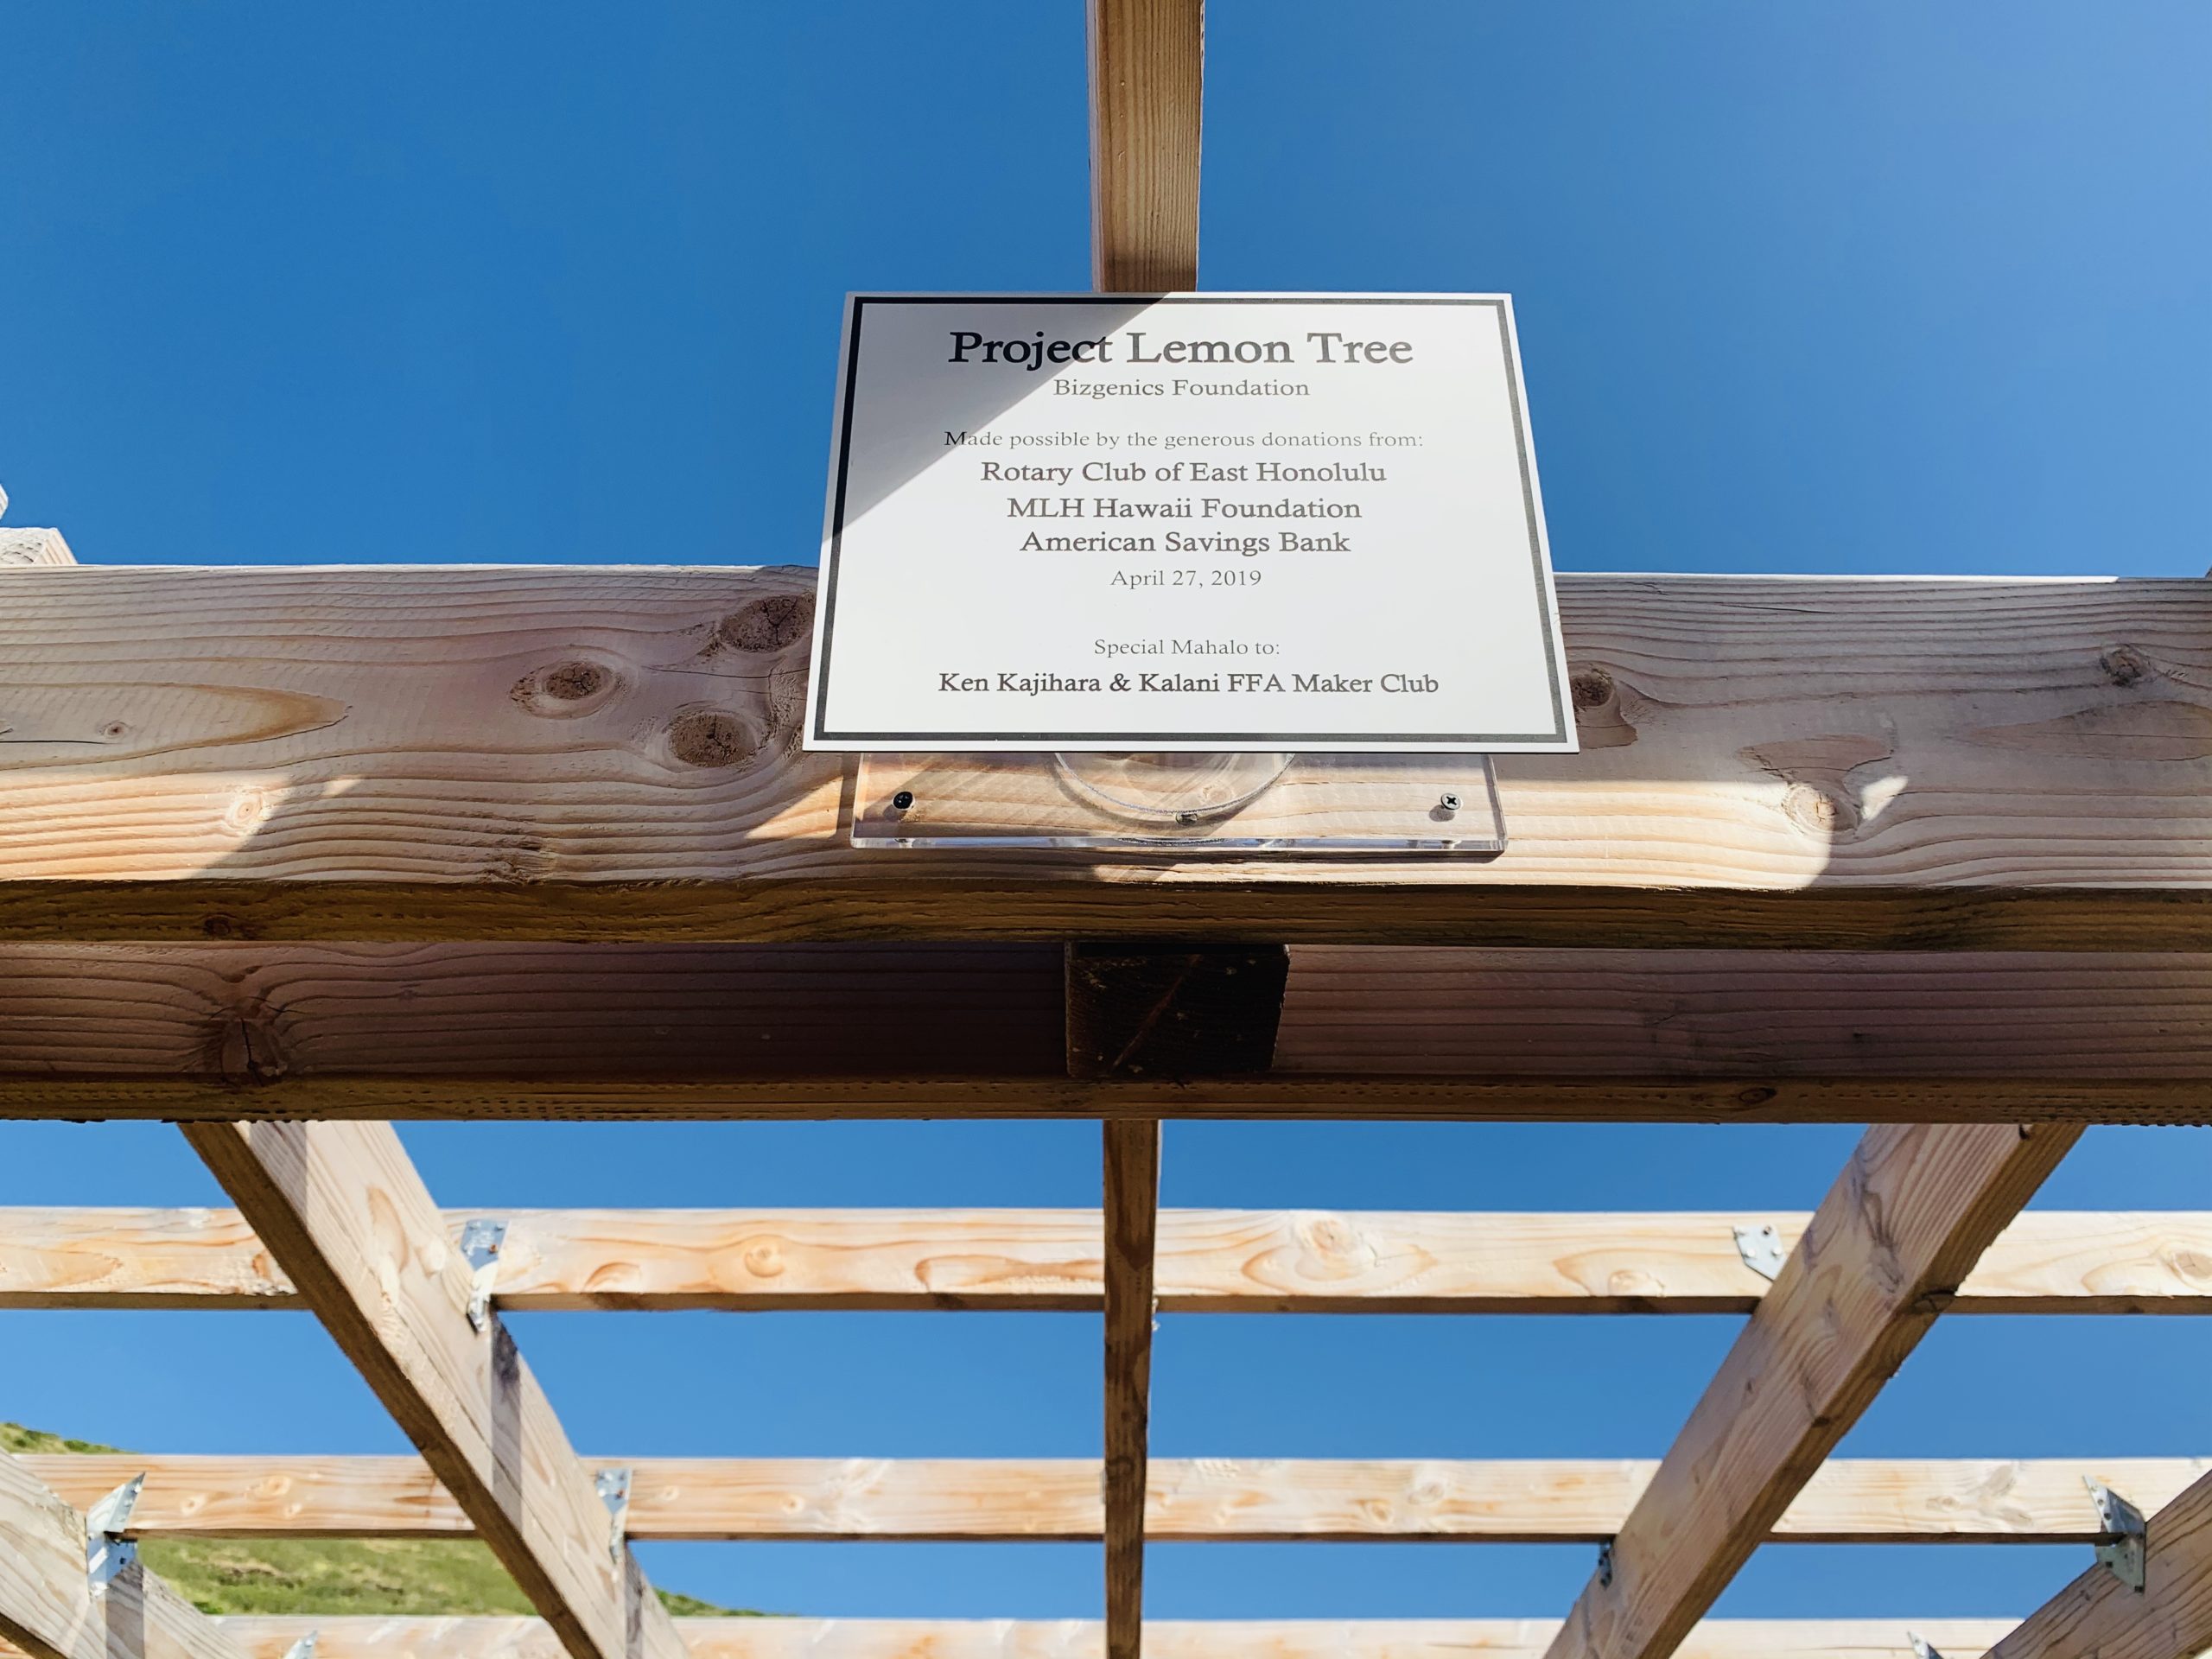 Sponsor dedication sign on the Kalani High School Project Lemon Tree pergola | Bizgenics Foundation